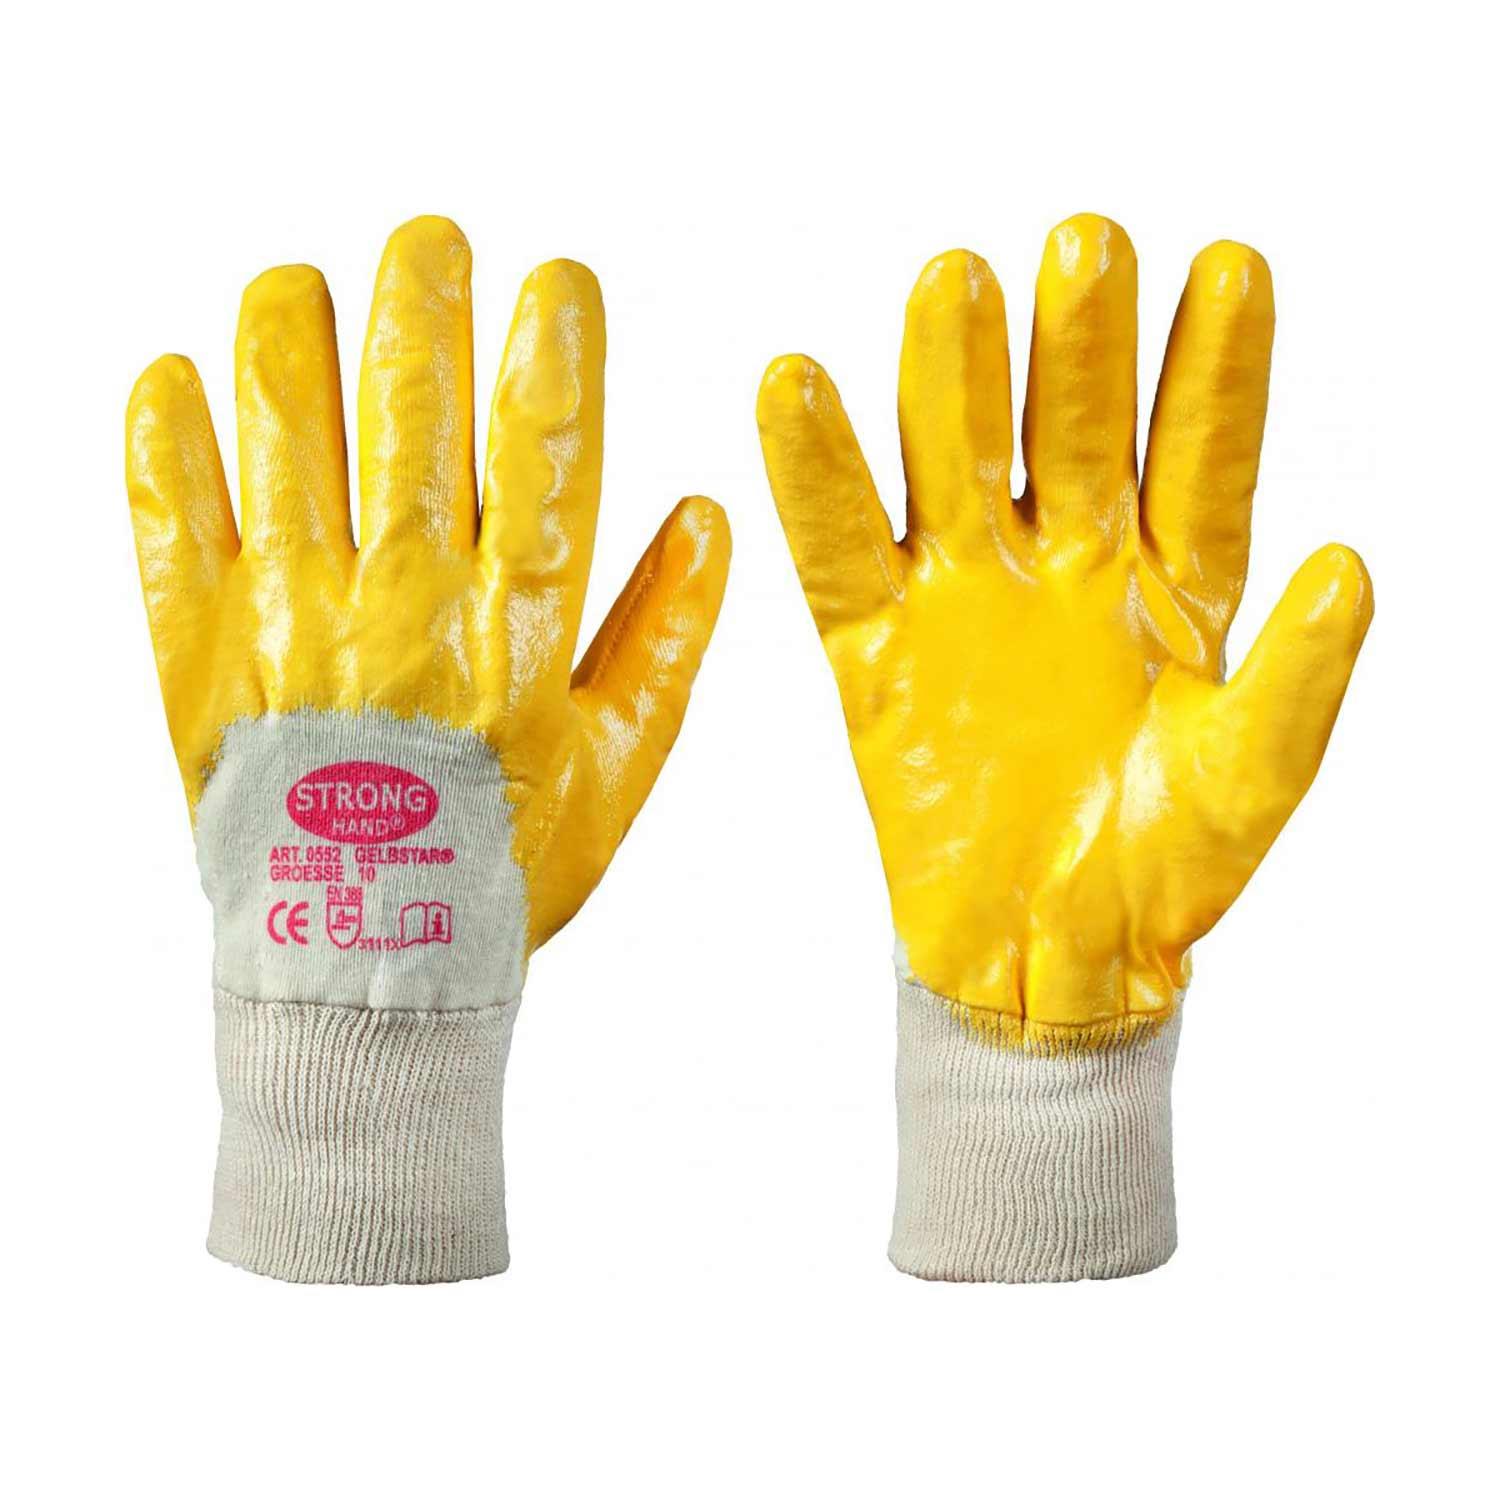 Gelbstar Stronghand Nitril Handschuh Gr. 11